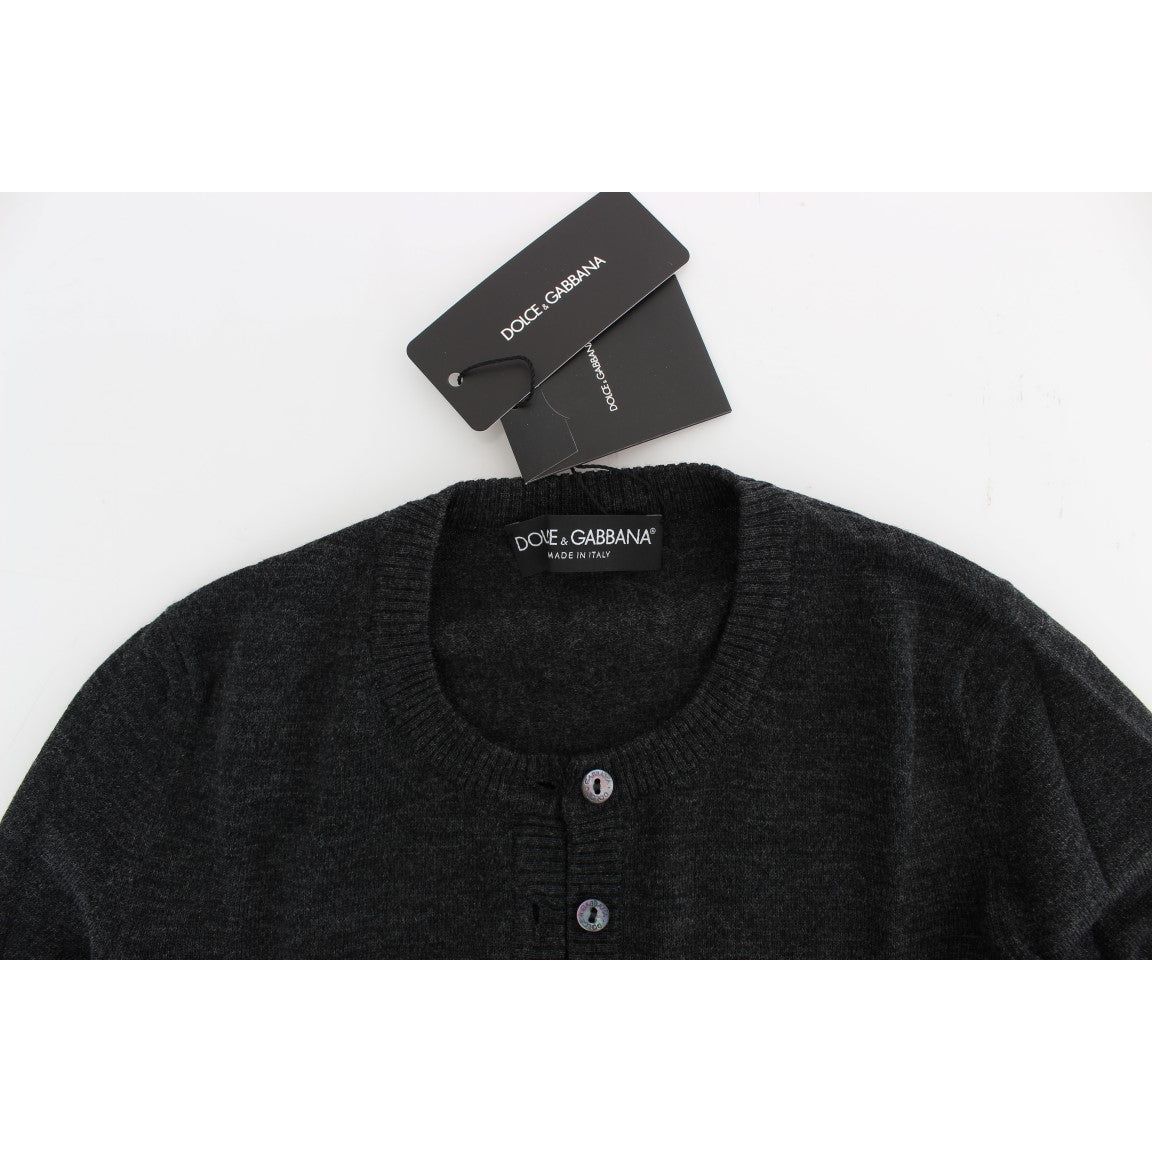 Dolce & Gabbana Elegant Gray Wool Cardigan Sweater gray-wool-button-cardigan-sweater-1